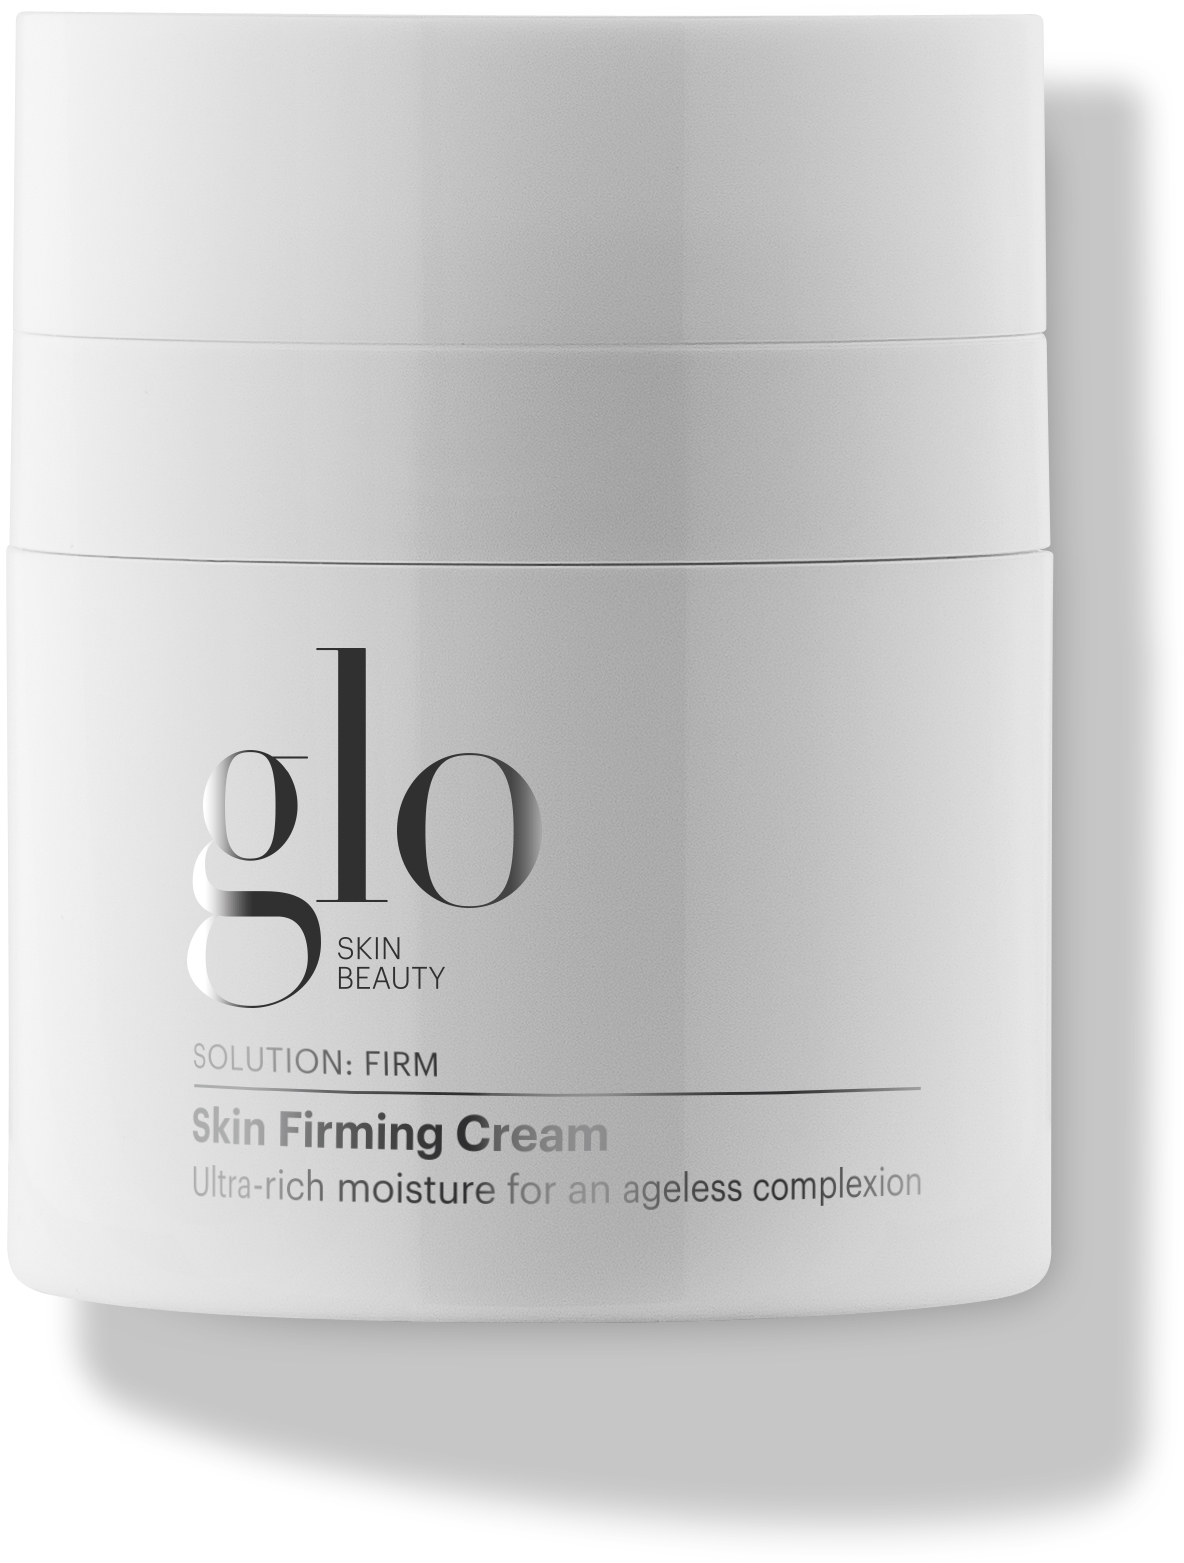 gloTherapeutics Skin Firming Cream